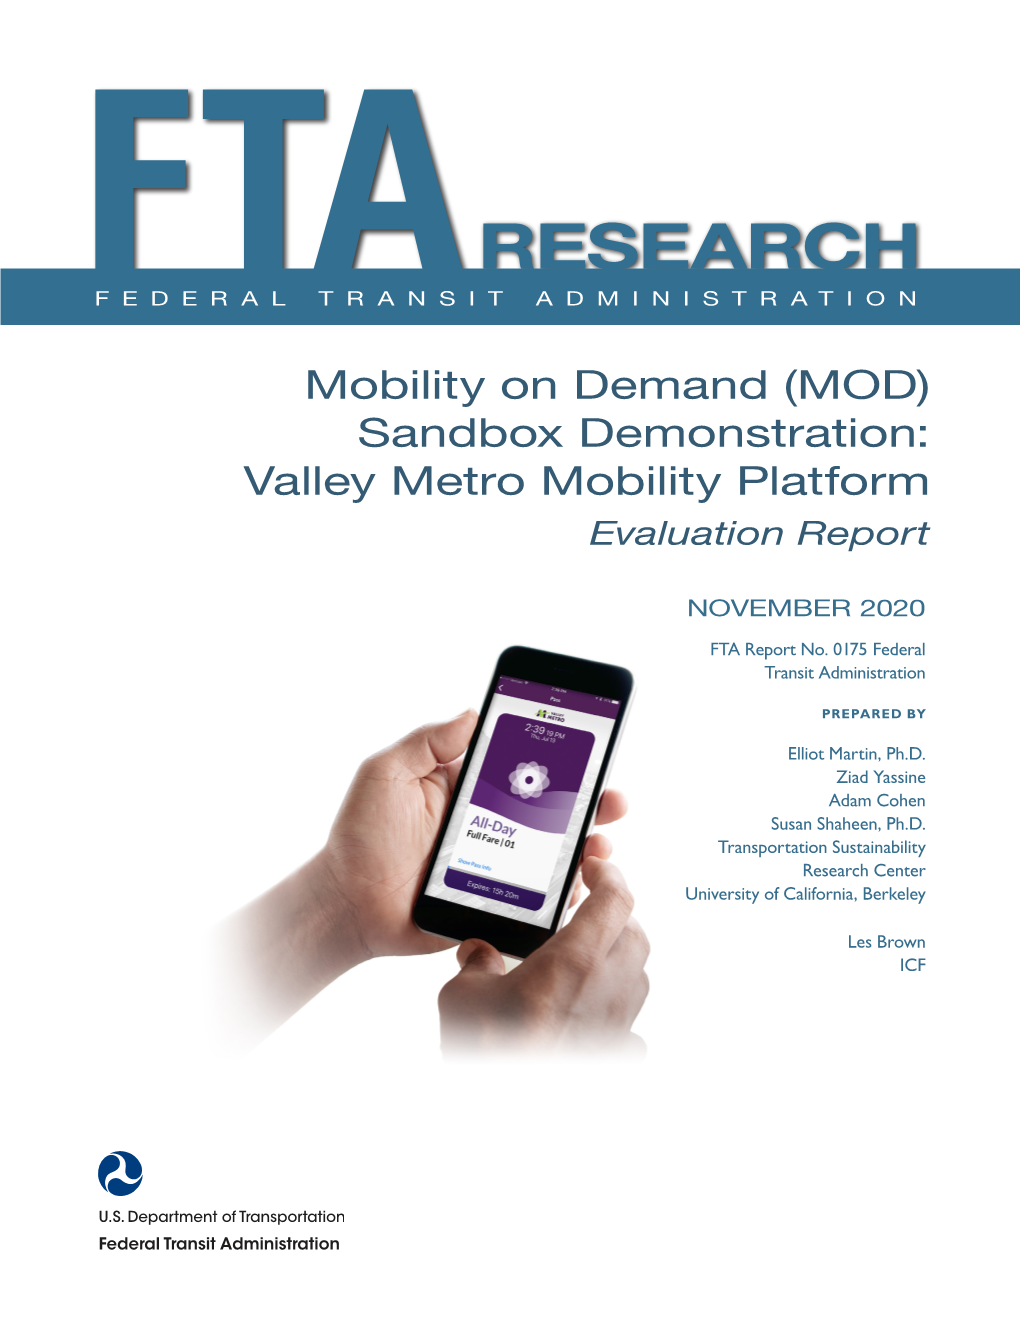 Sandbox Demonstration: Valley Metro Mobility Platform Evaluation Report